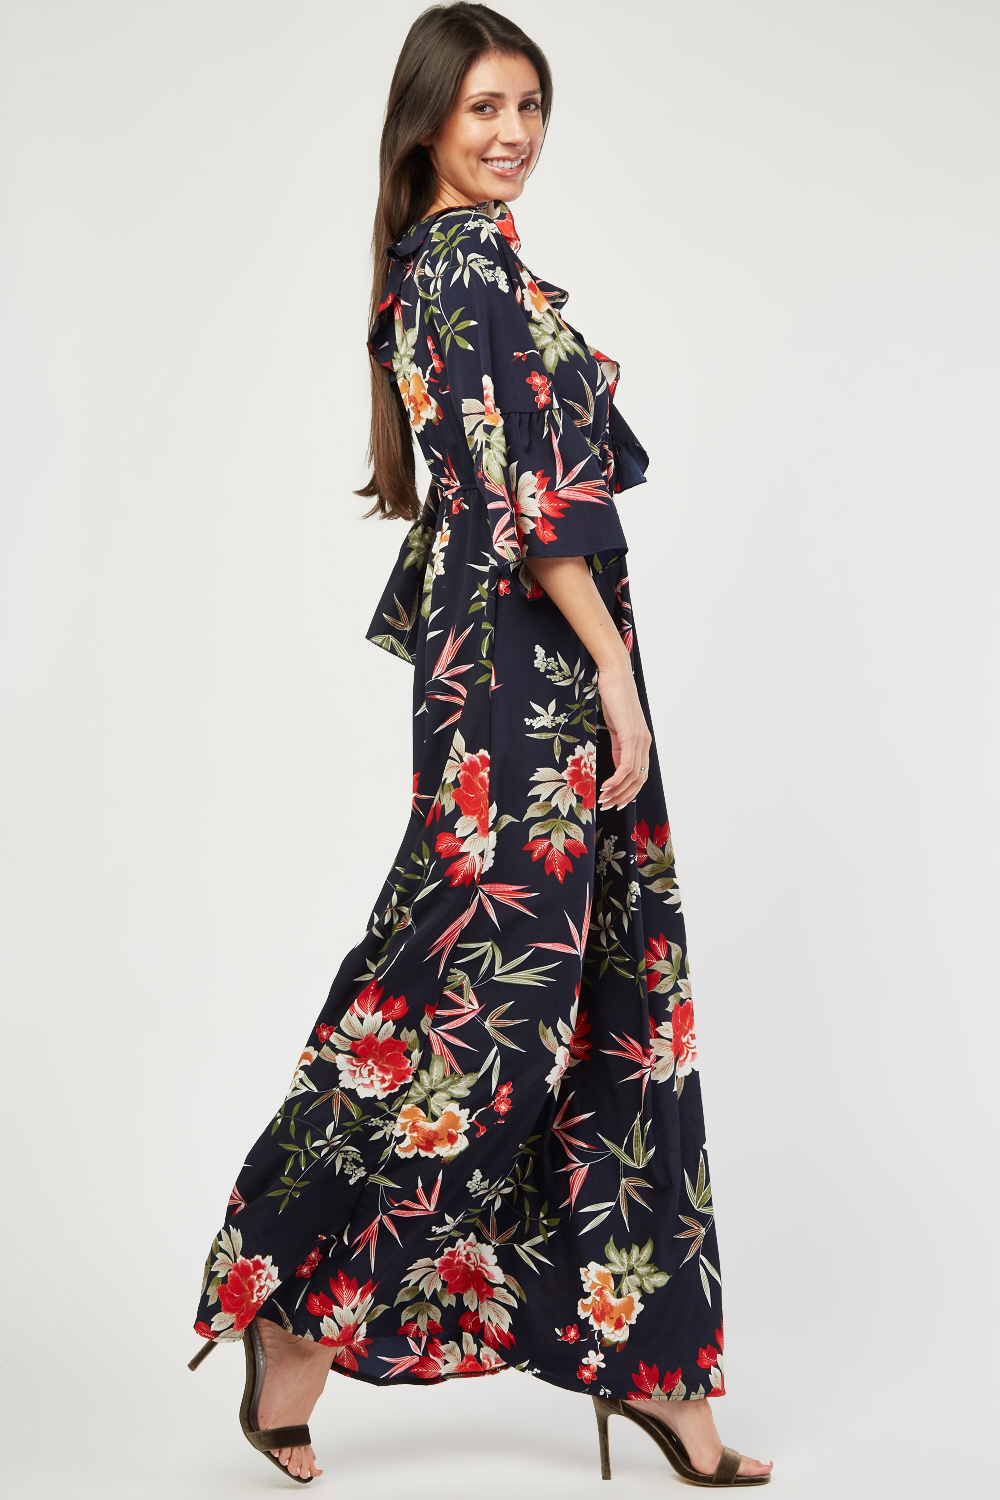 Ruffle Floral Print Maxi Dress - Just $7